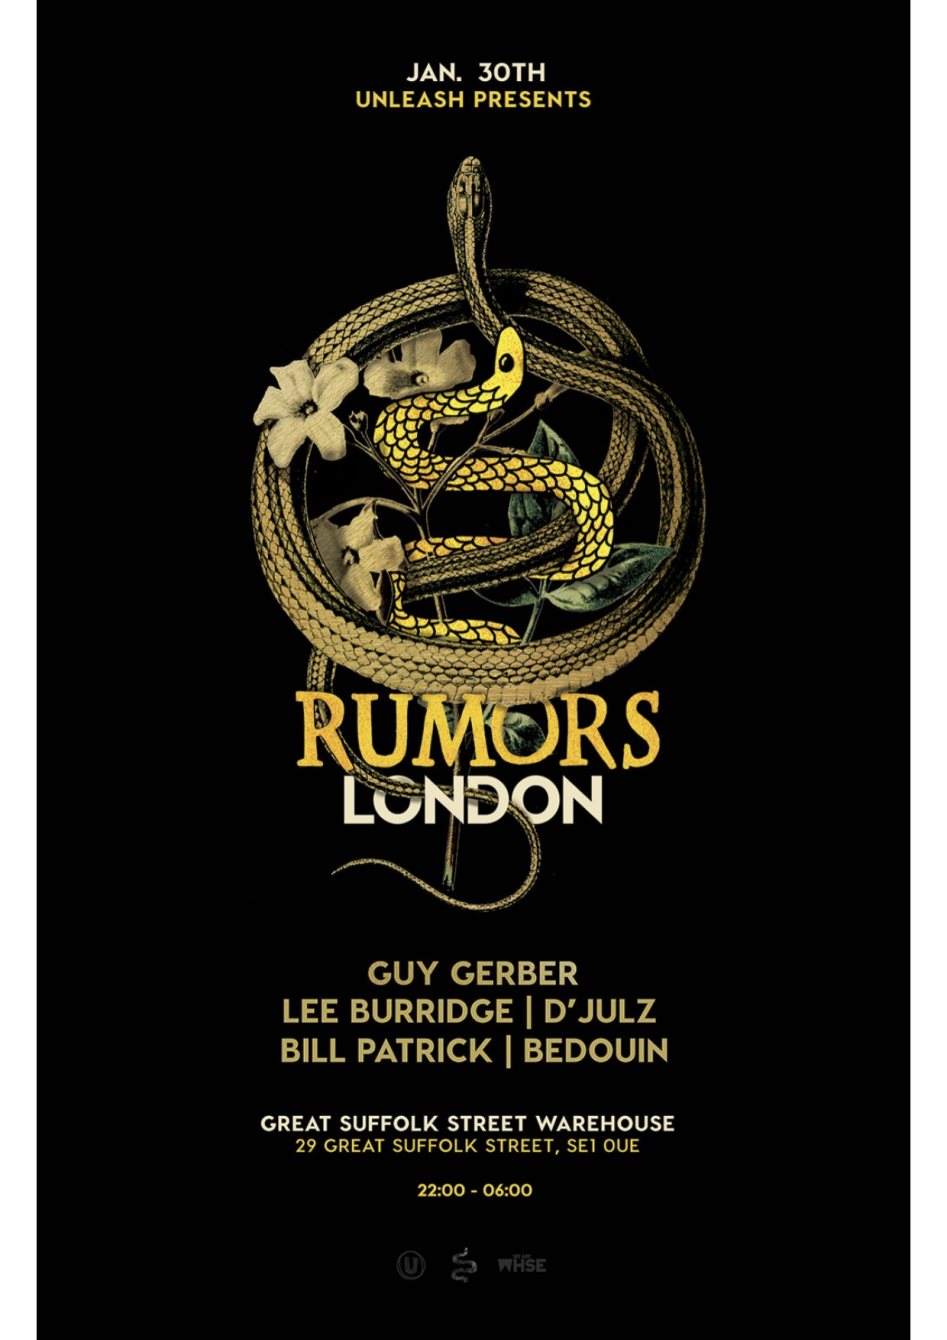 Guy Gerber + Unleash present Rumors London - フライヤー表